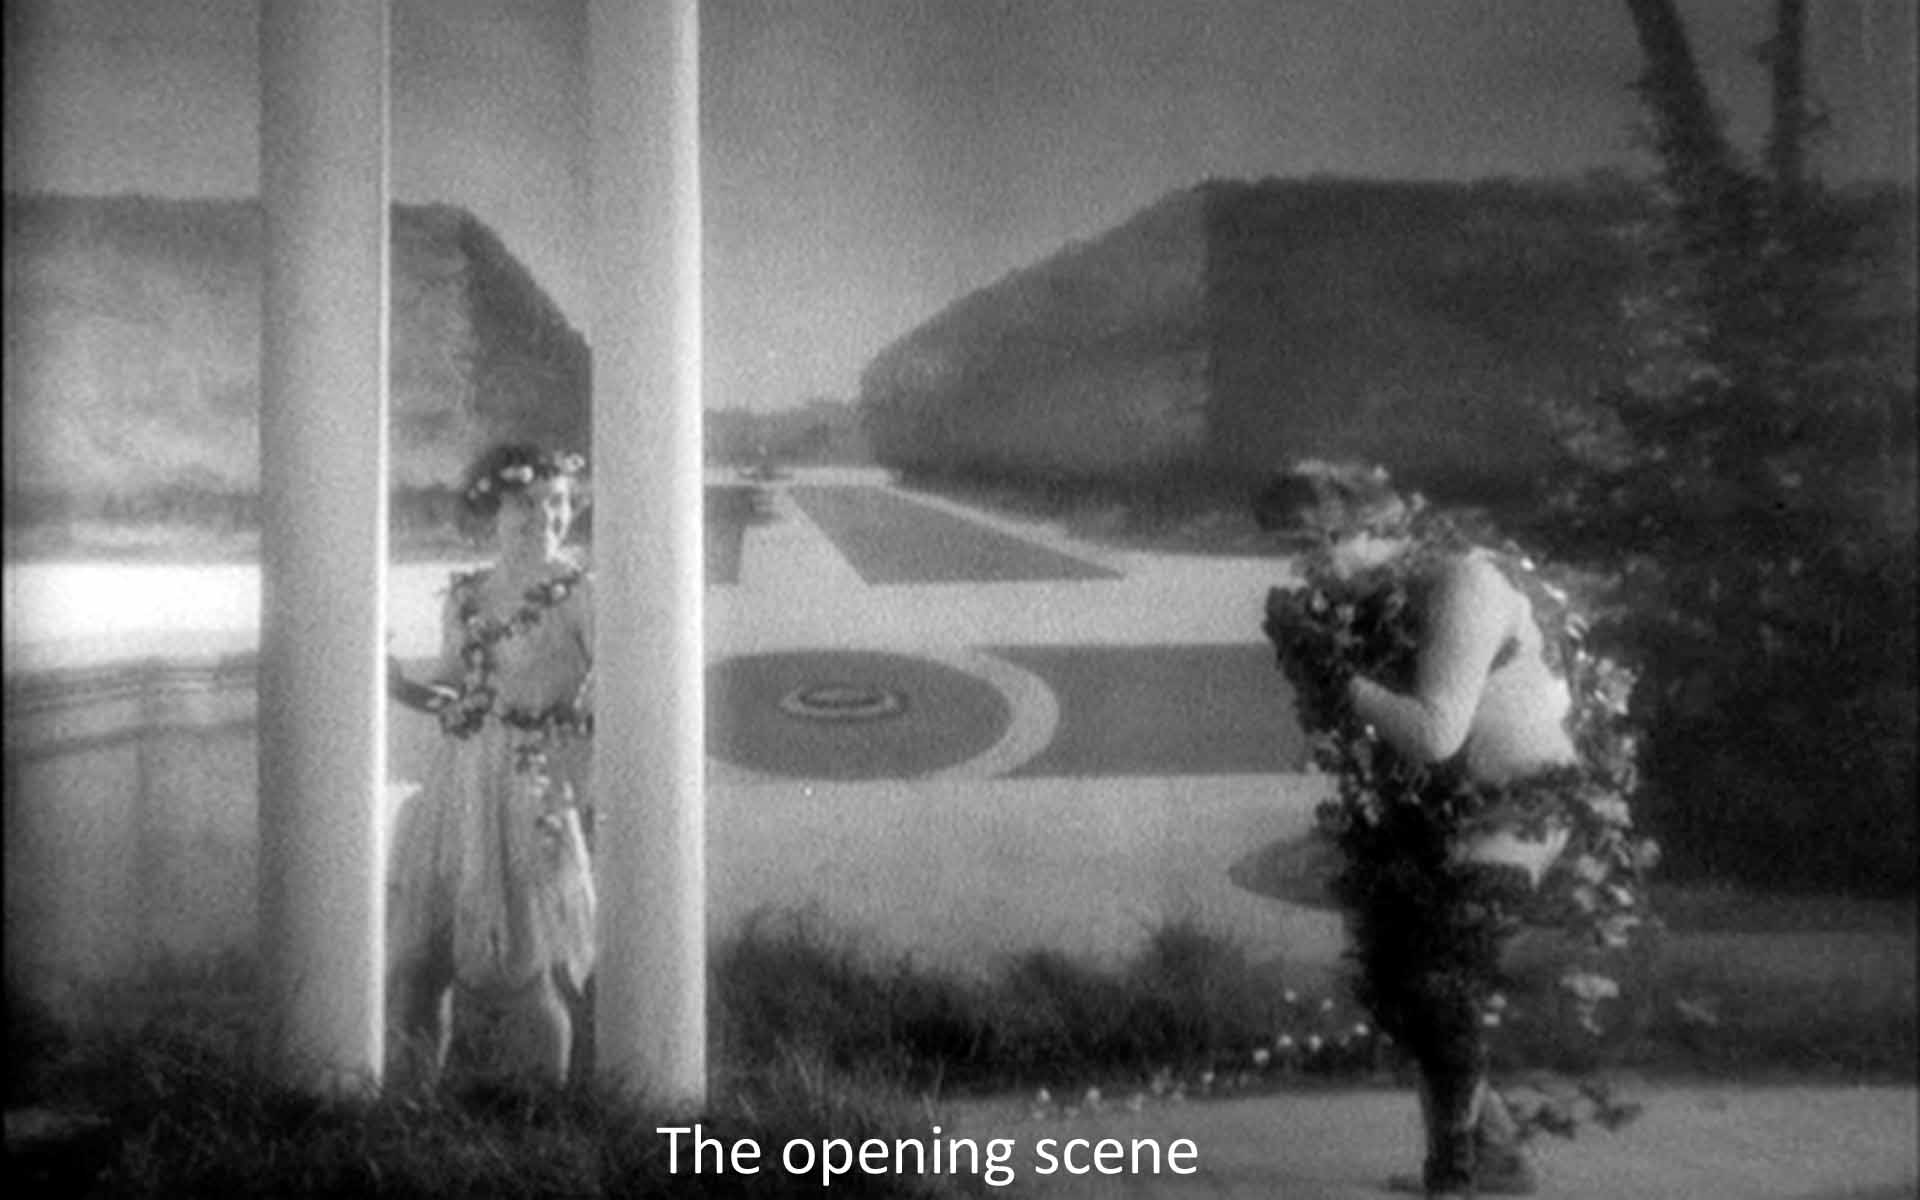 The opening scene